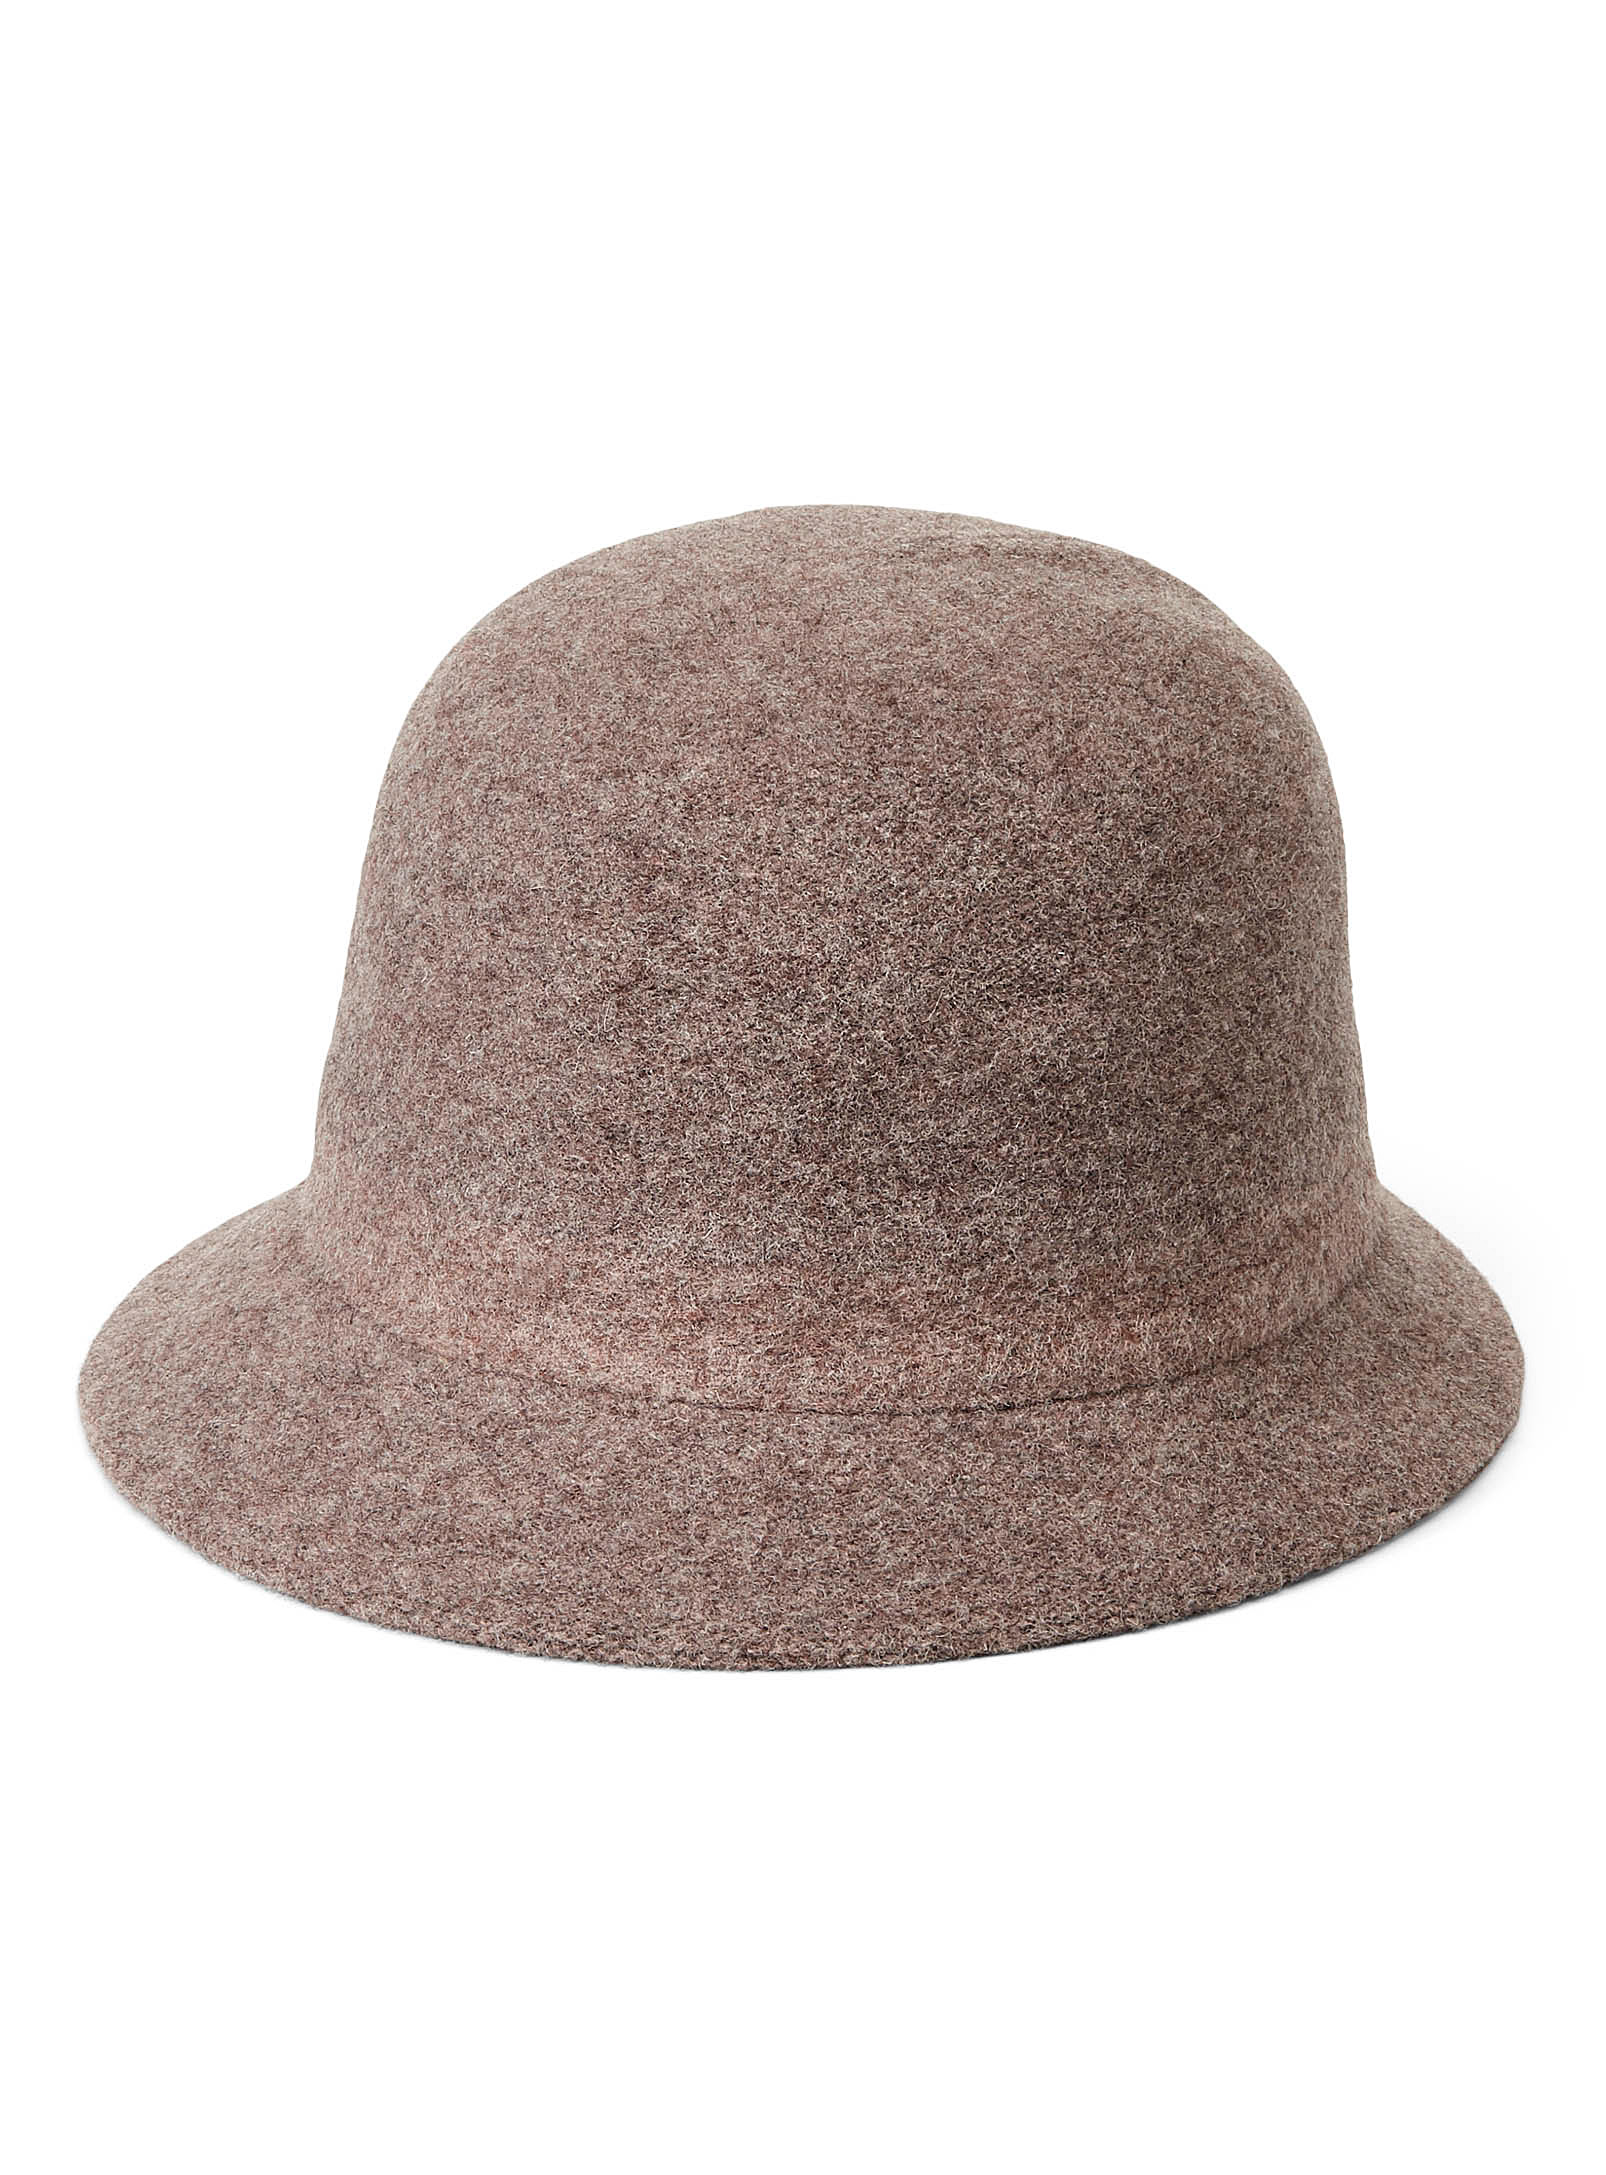 Canadian Hat - Chapeau La cloche minimaliste